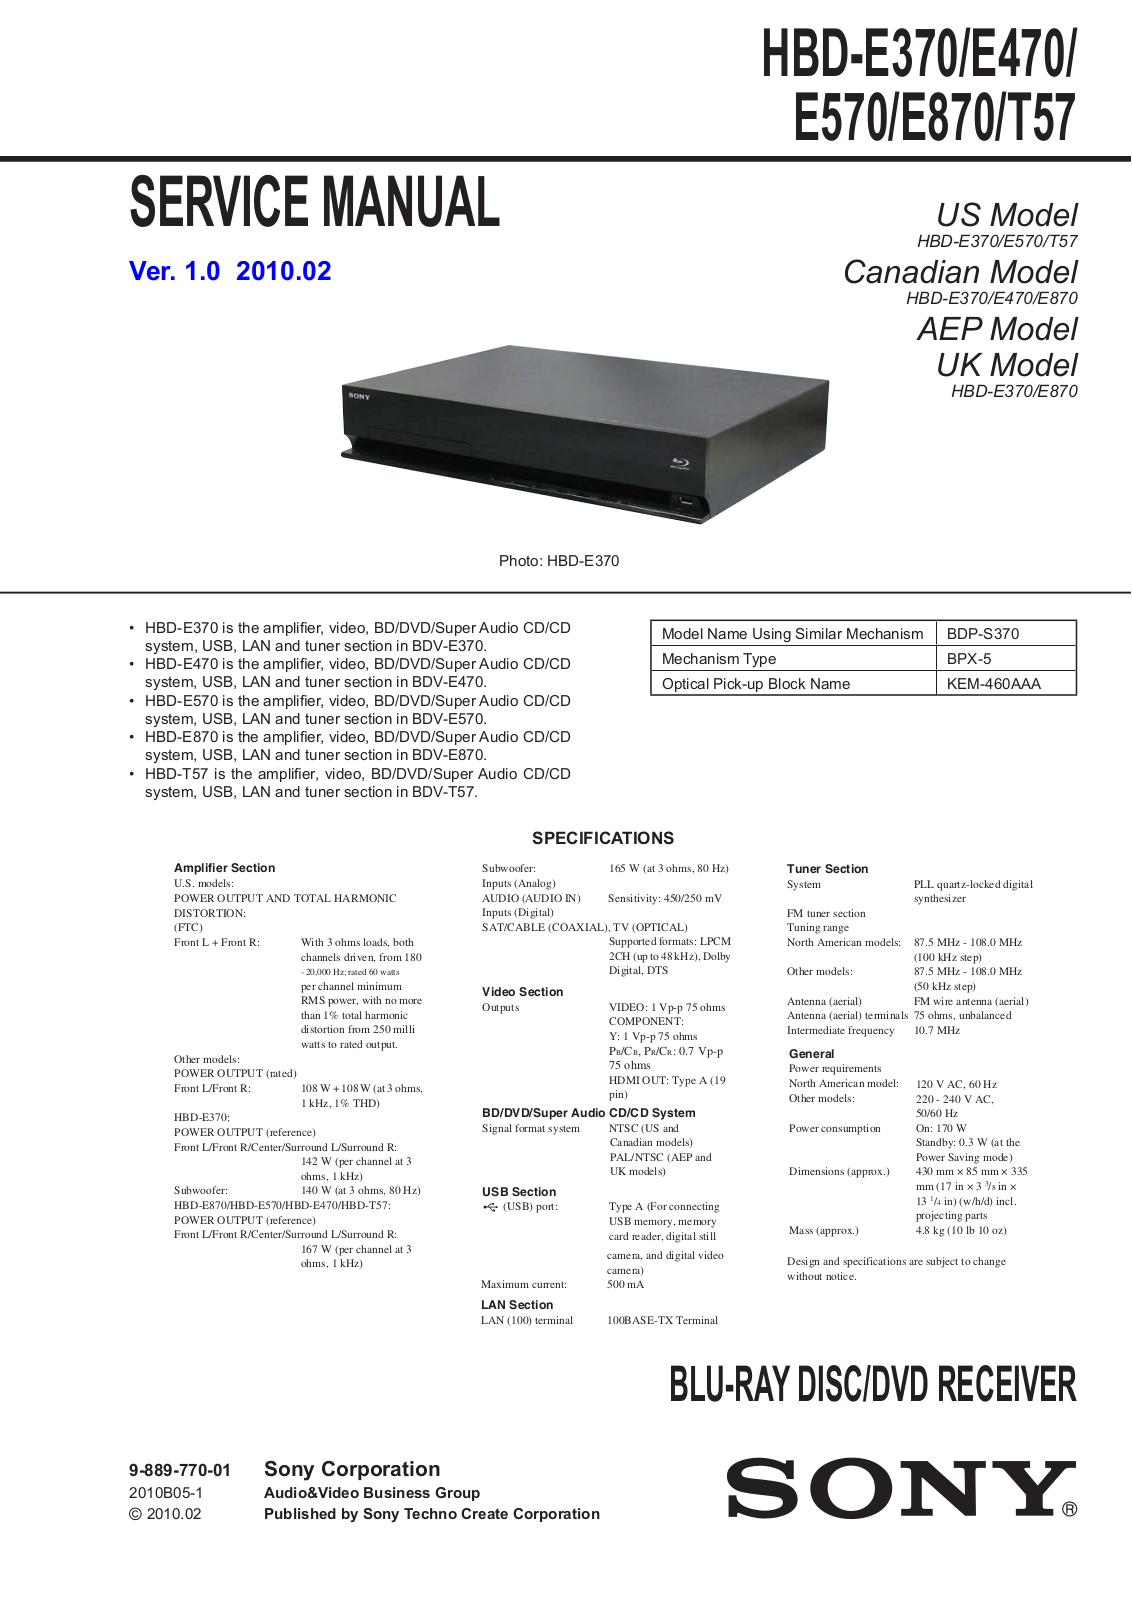 Sony HBDE-470, HBDE-570, HBDE-870, HBDT-57 Service manual